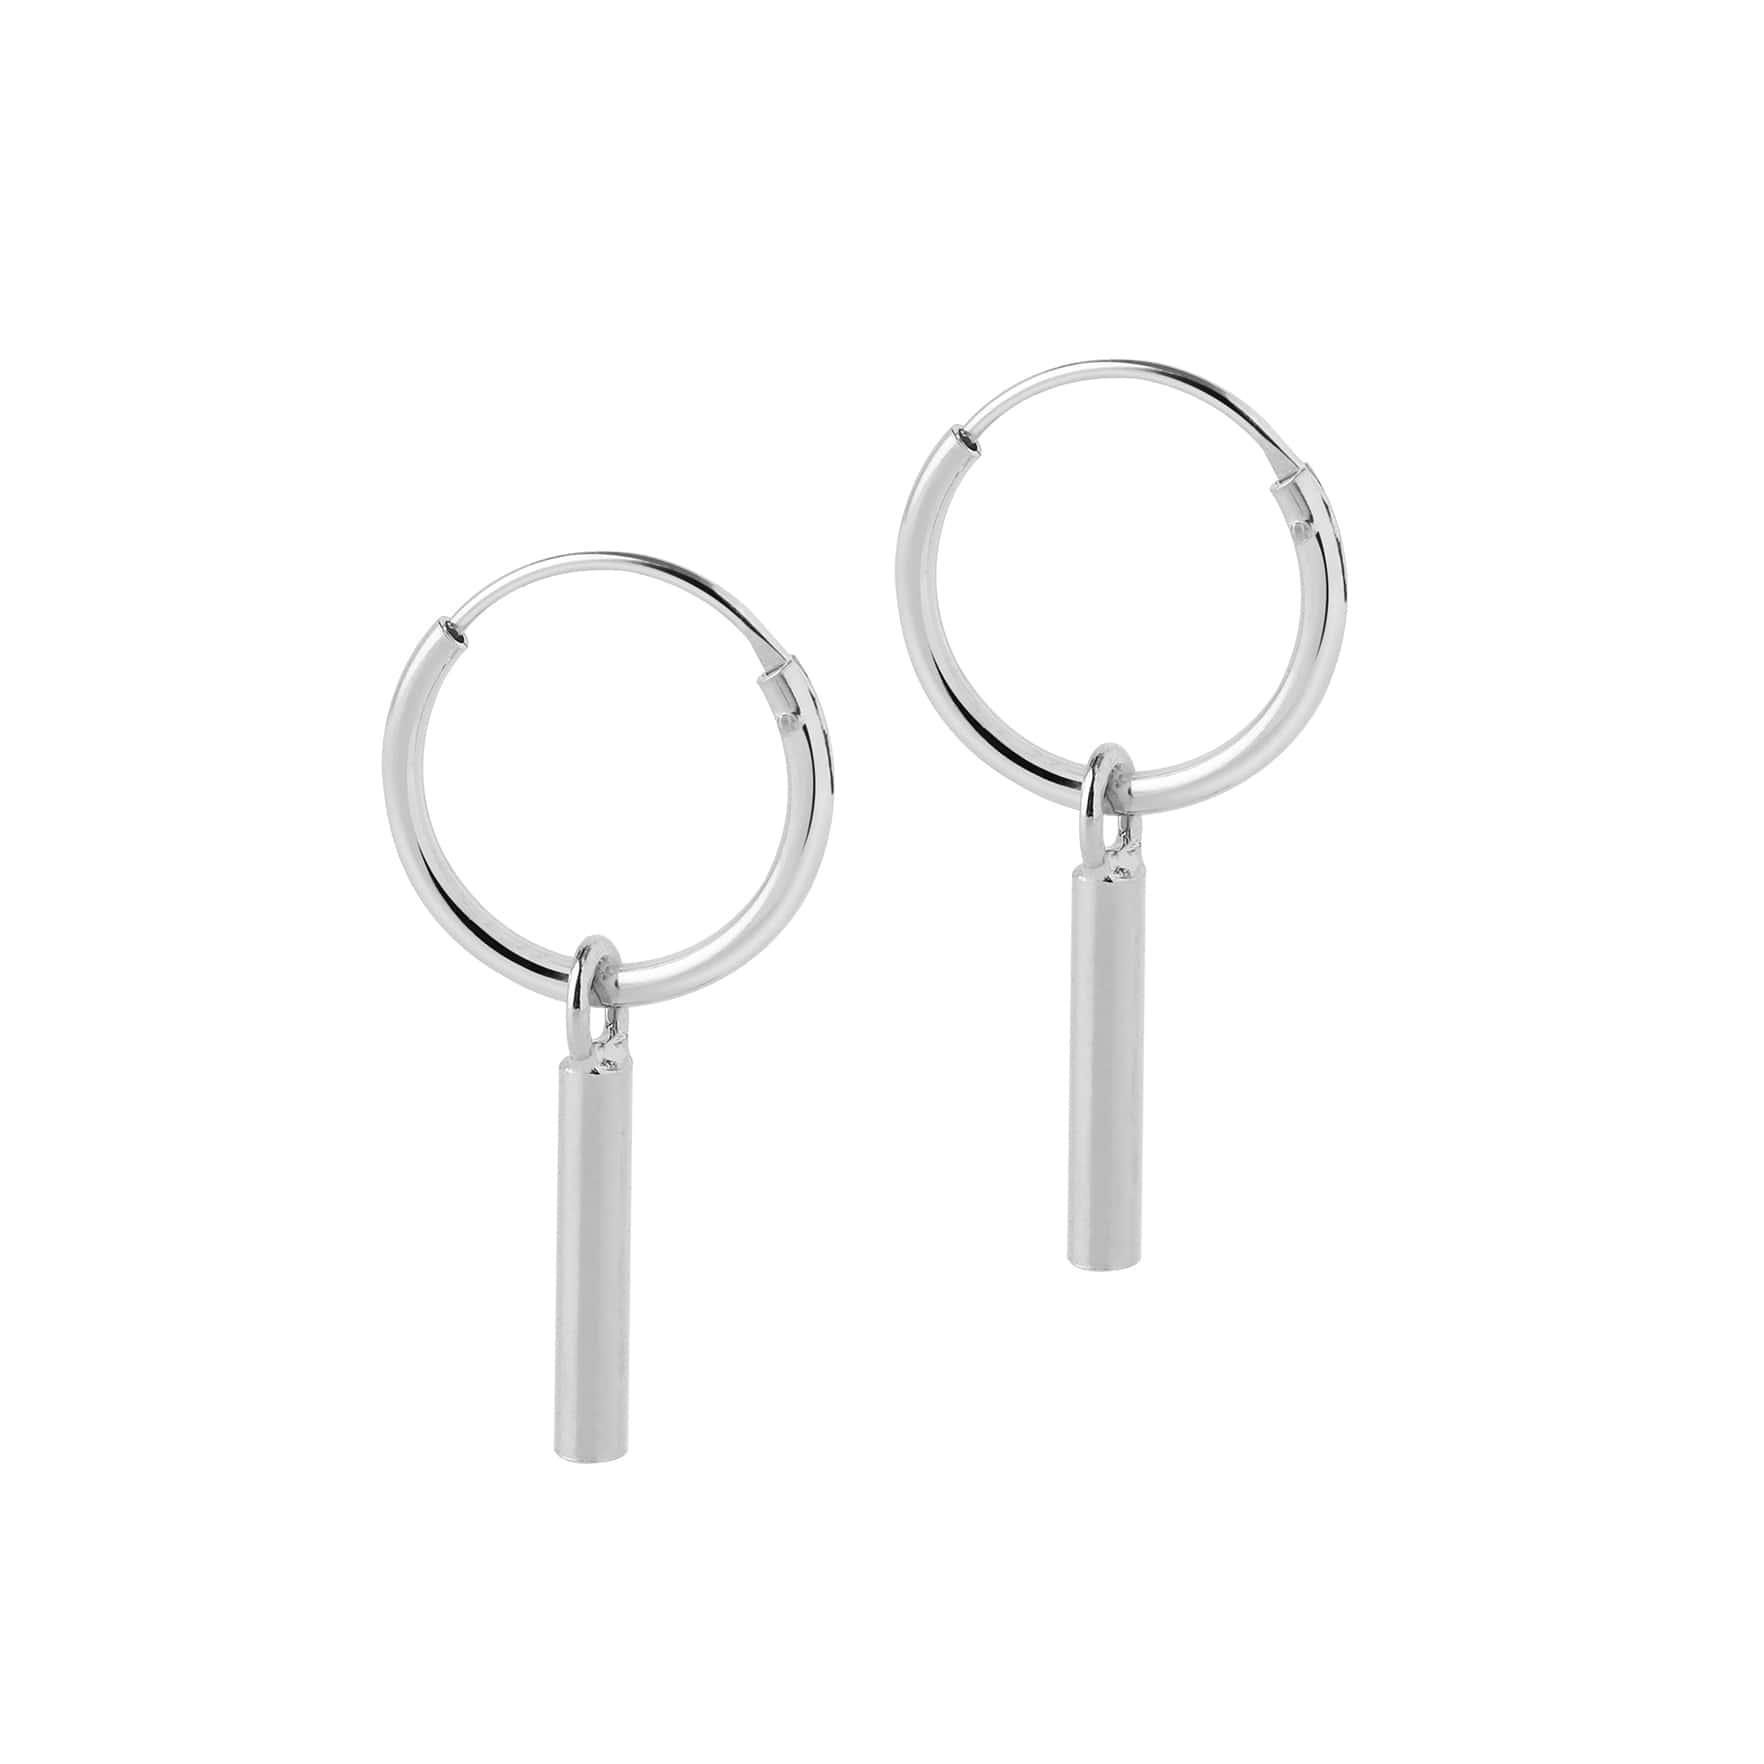 12mm silver hoop earrings with long rod